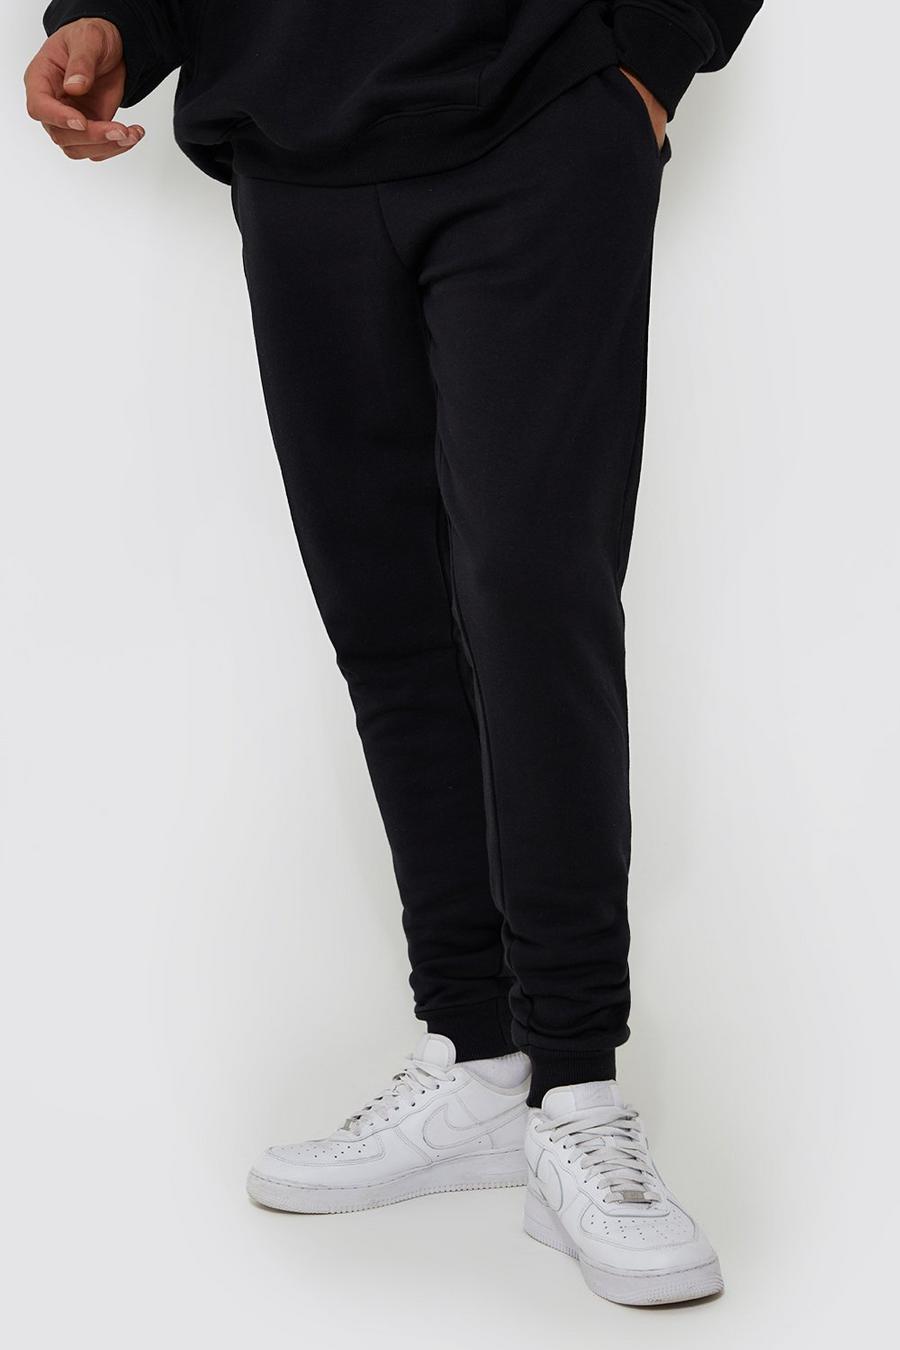 Pantalón deportivo Tall básico pitillo con algodón ecológico, Black negro image number 1